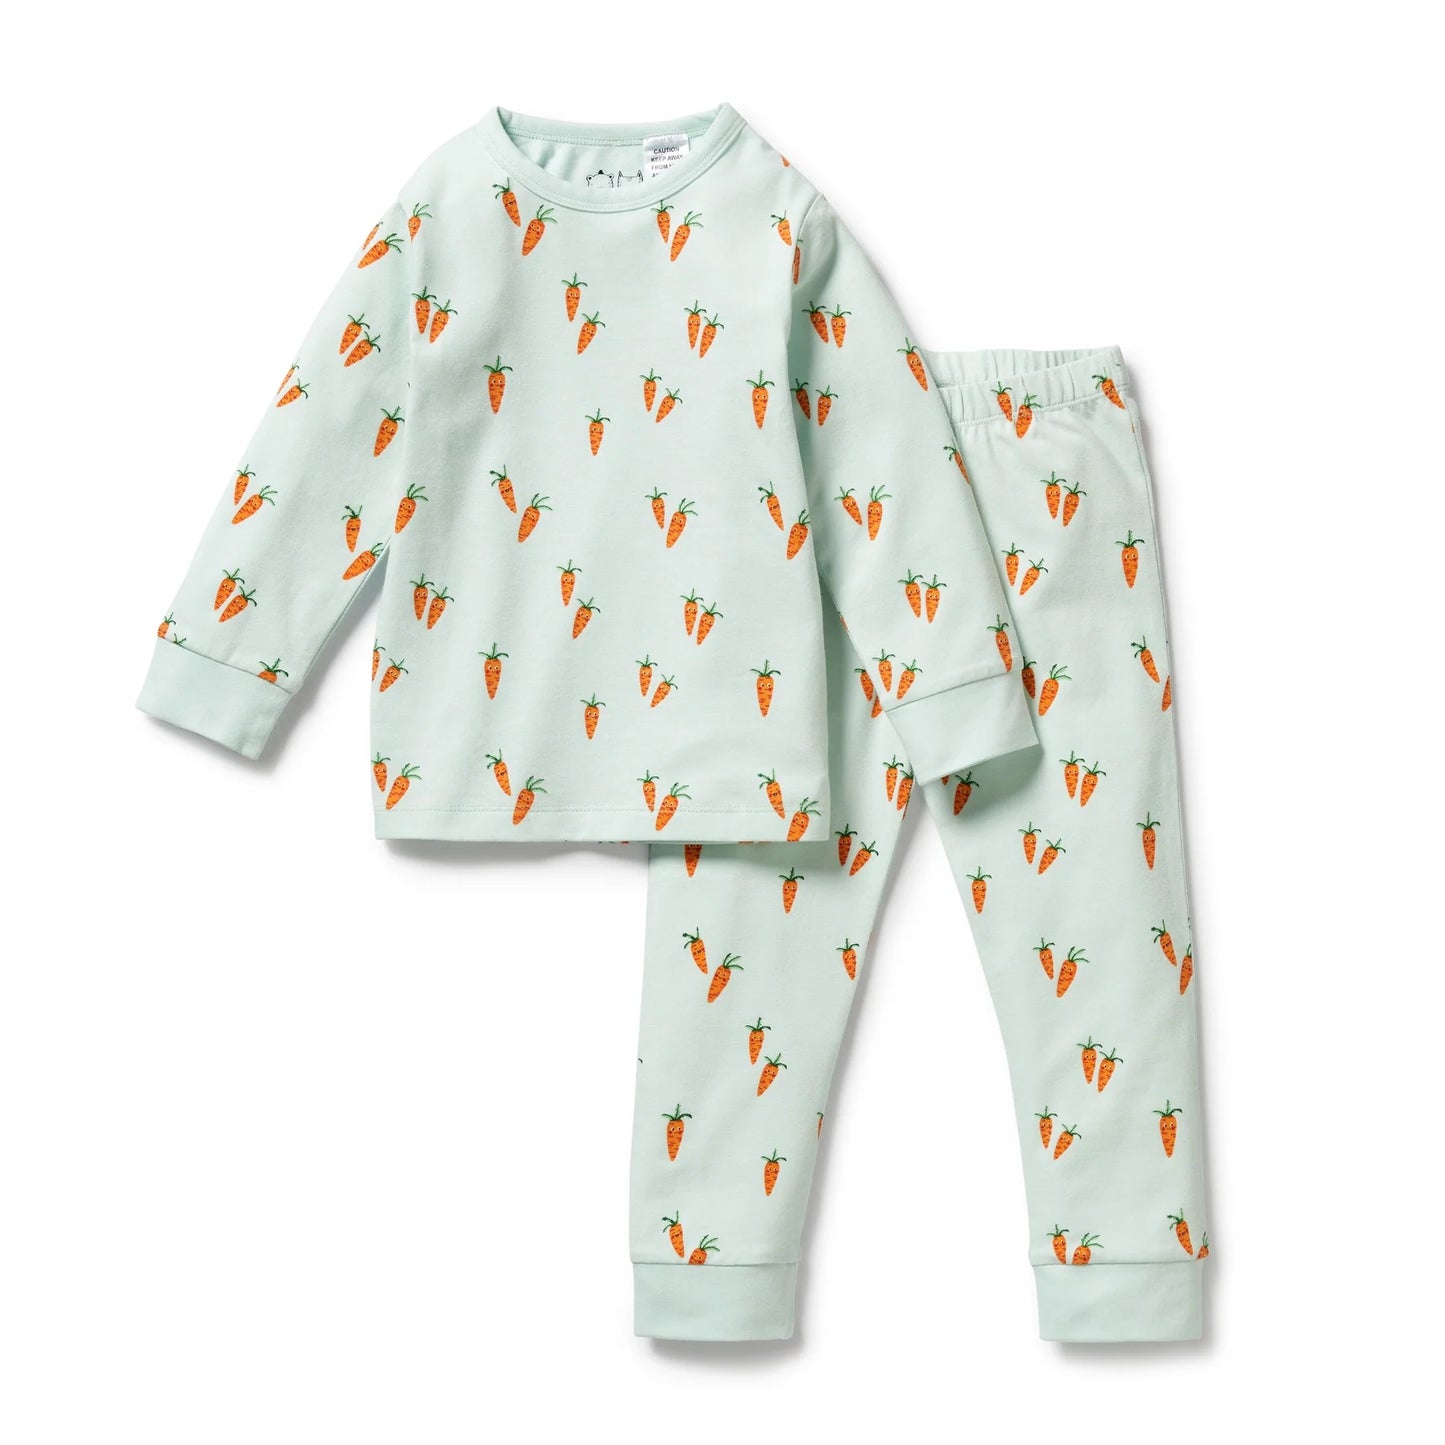 Cute Carrots Long Sleeved Pyjamas - Printed